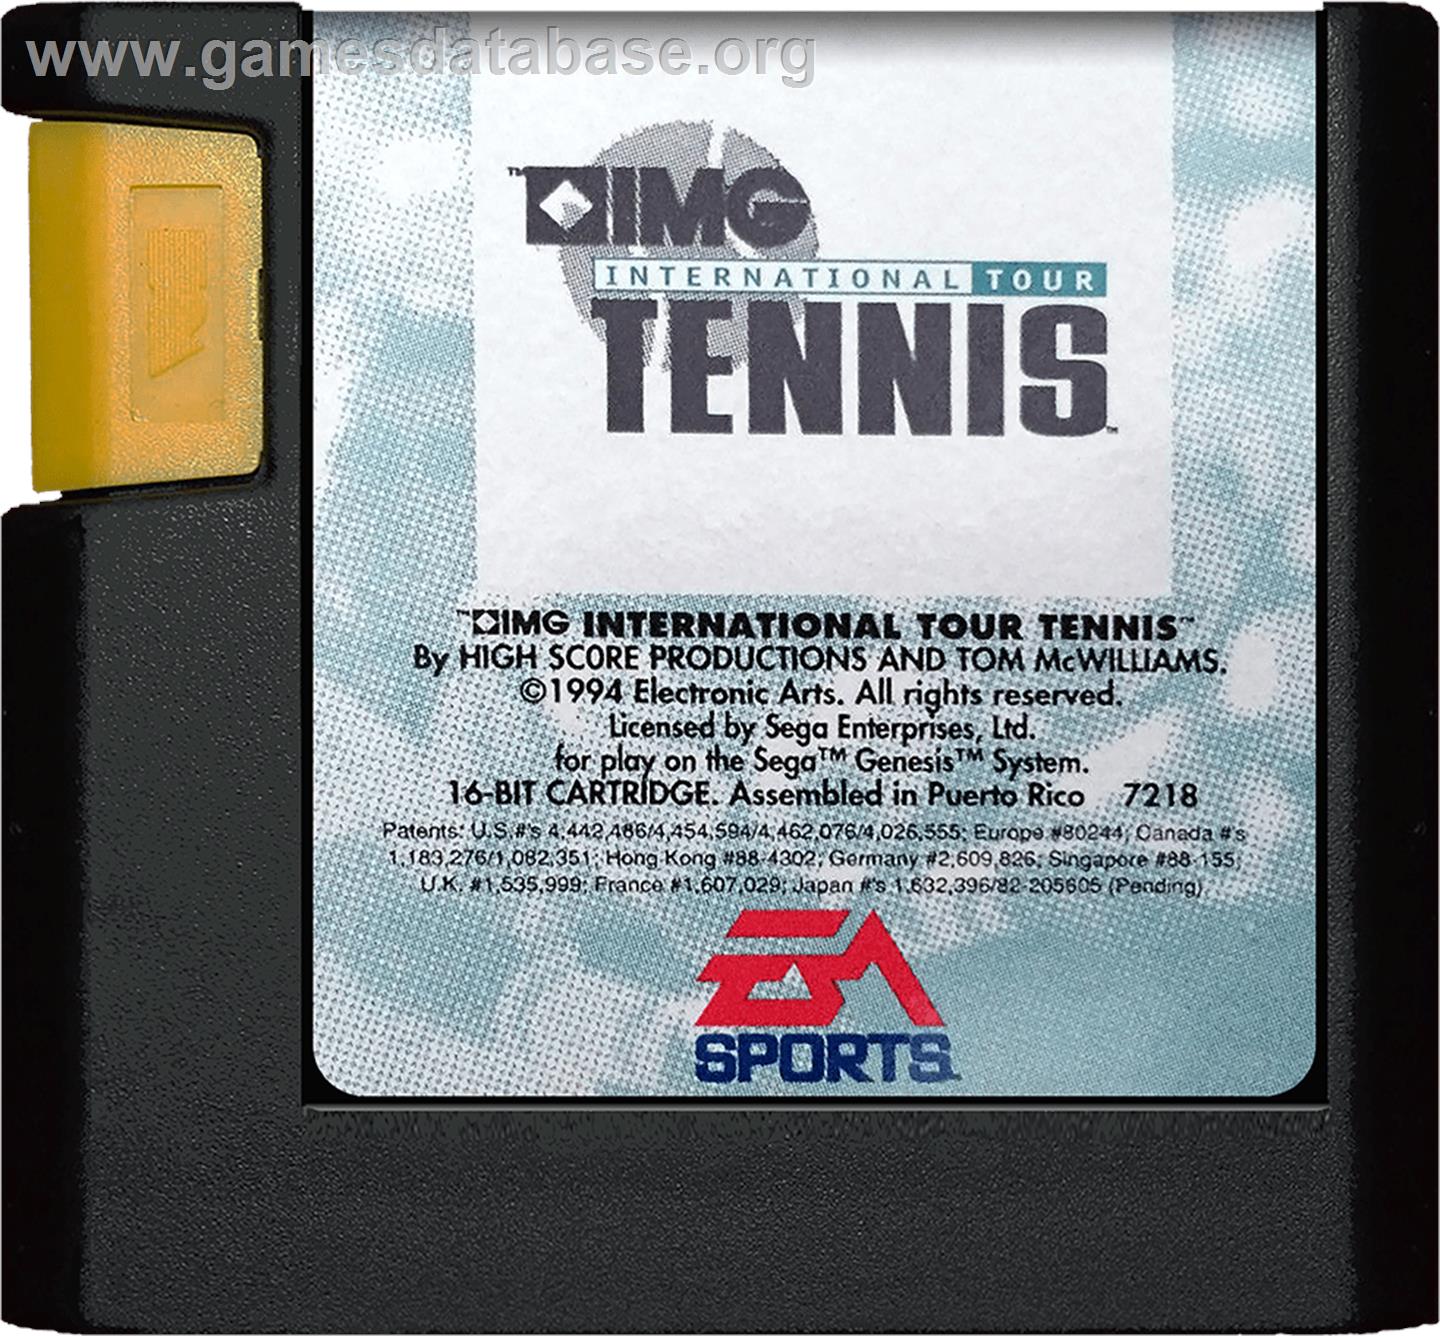 IMG International Tour Tennis - Sega Genesis - Artwork - Cartridge